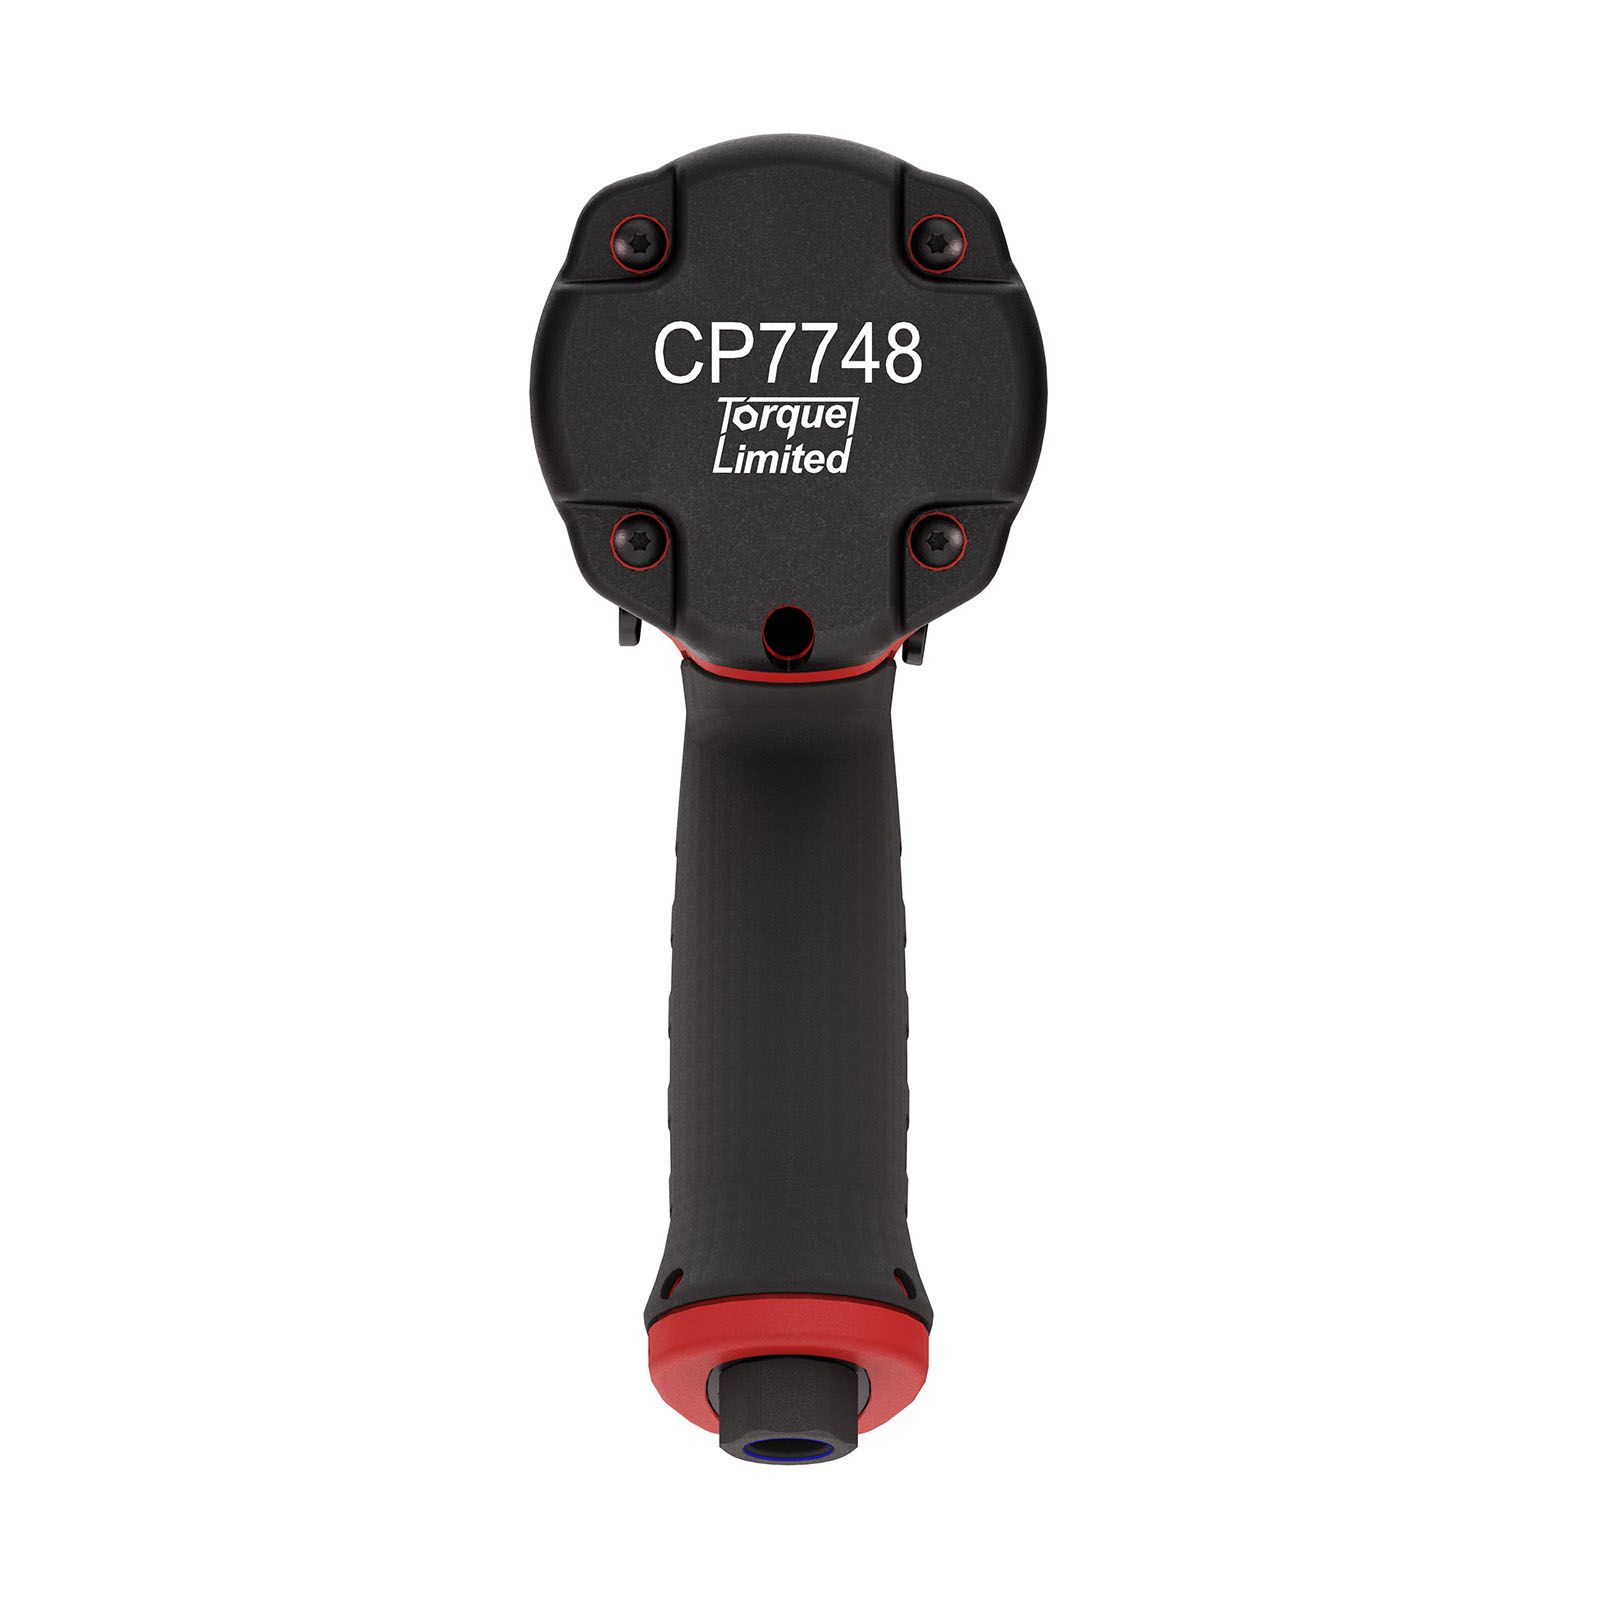 Seria CP7748TL - Chei de impact fotografie produs